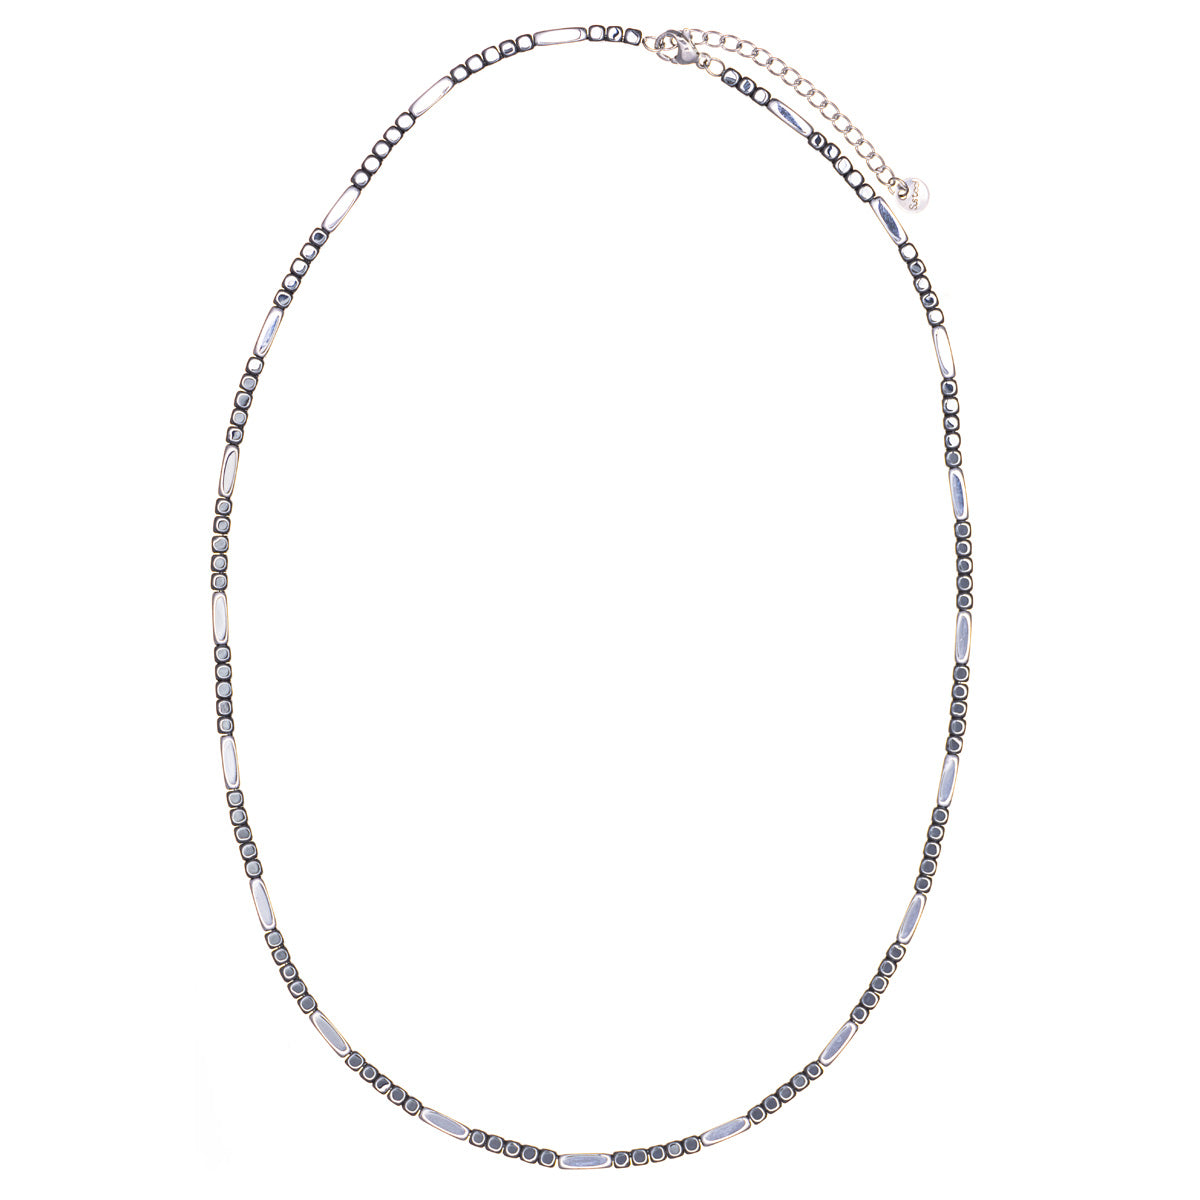 Hematite bead necklace with steel chain 49cm +5cm (Steel 316L)